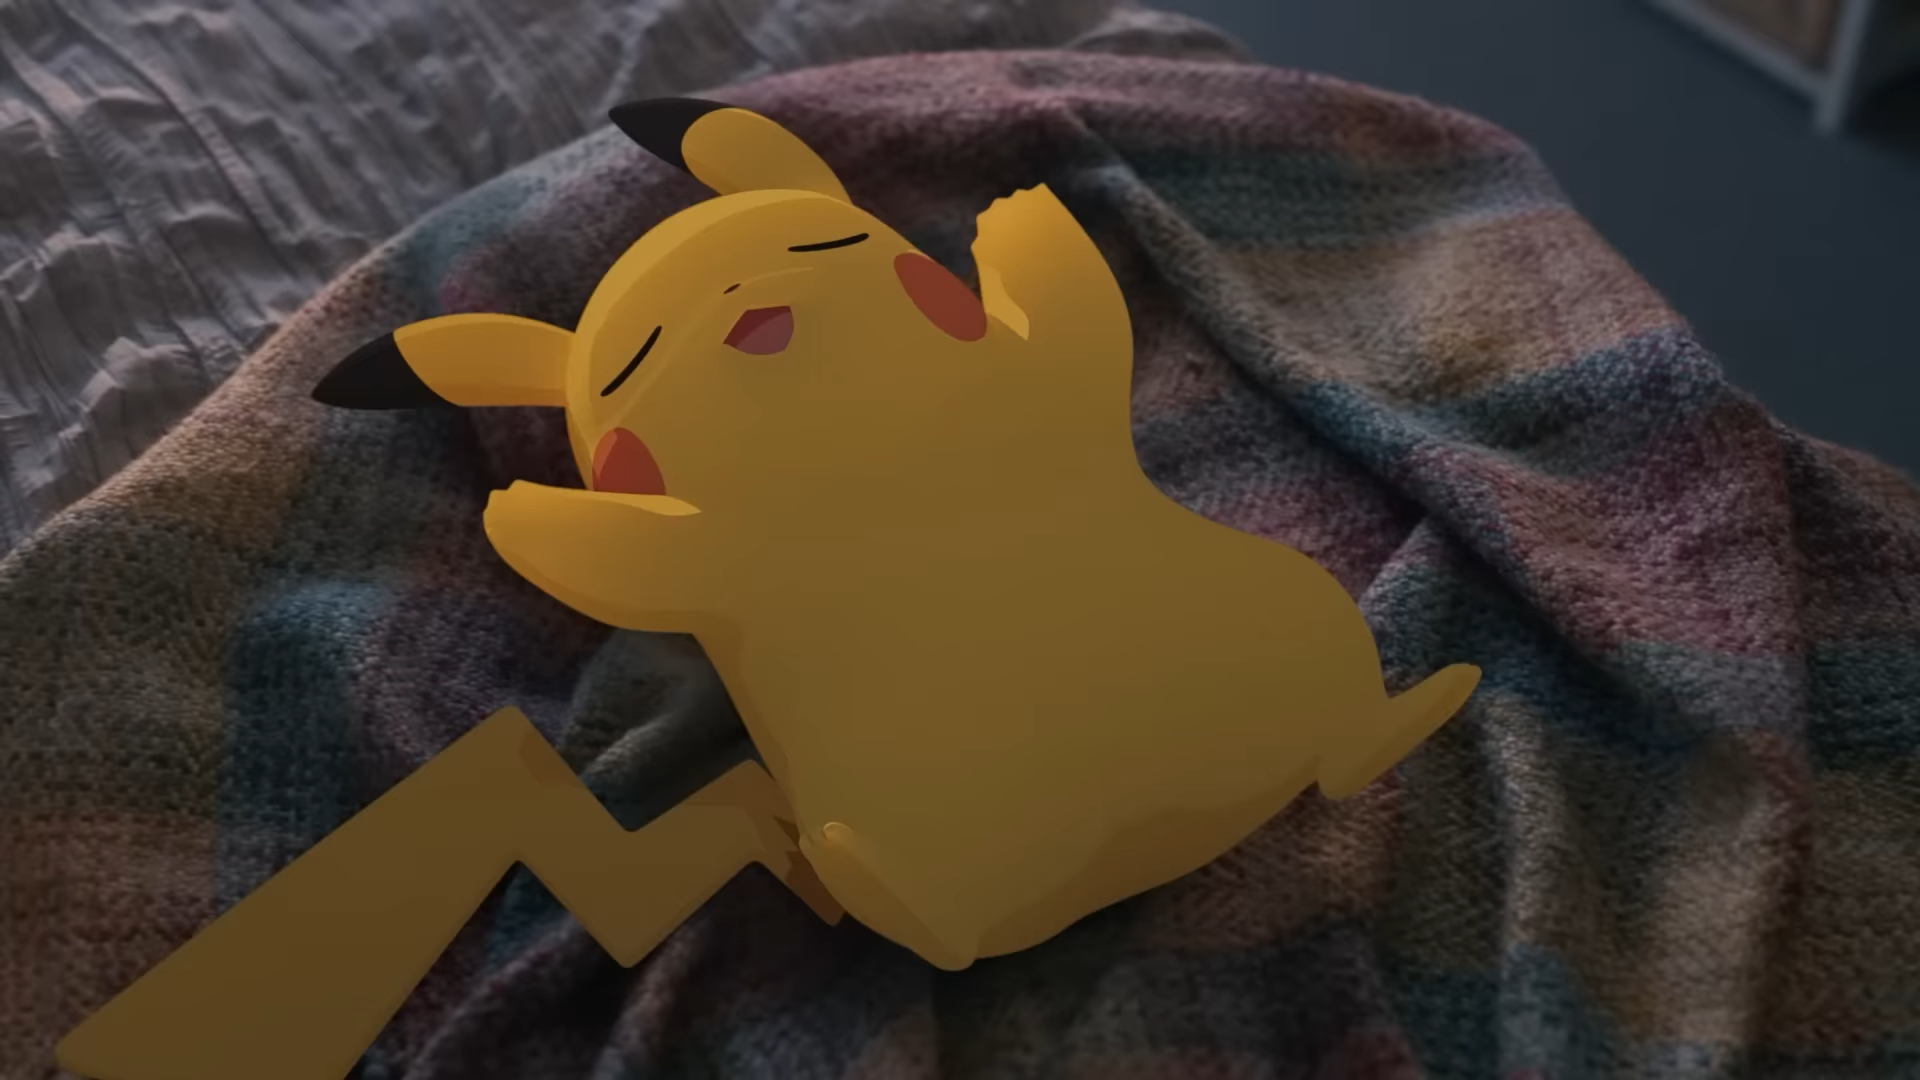 A sleeping Pikachu from the Pokemon Sleep trailer.